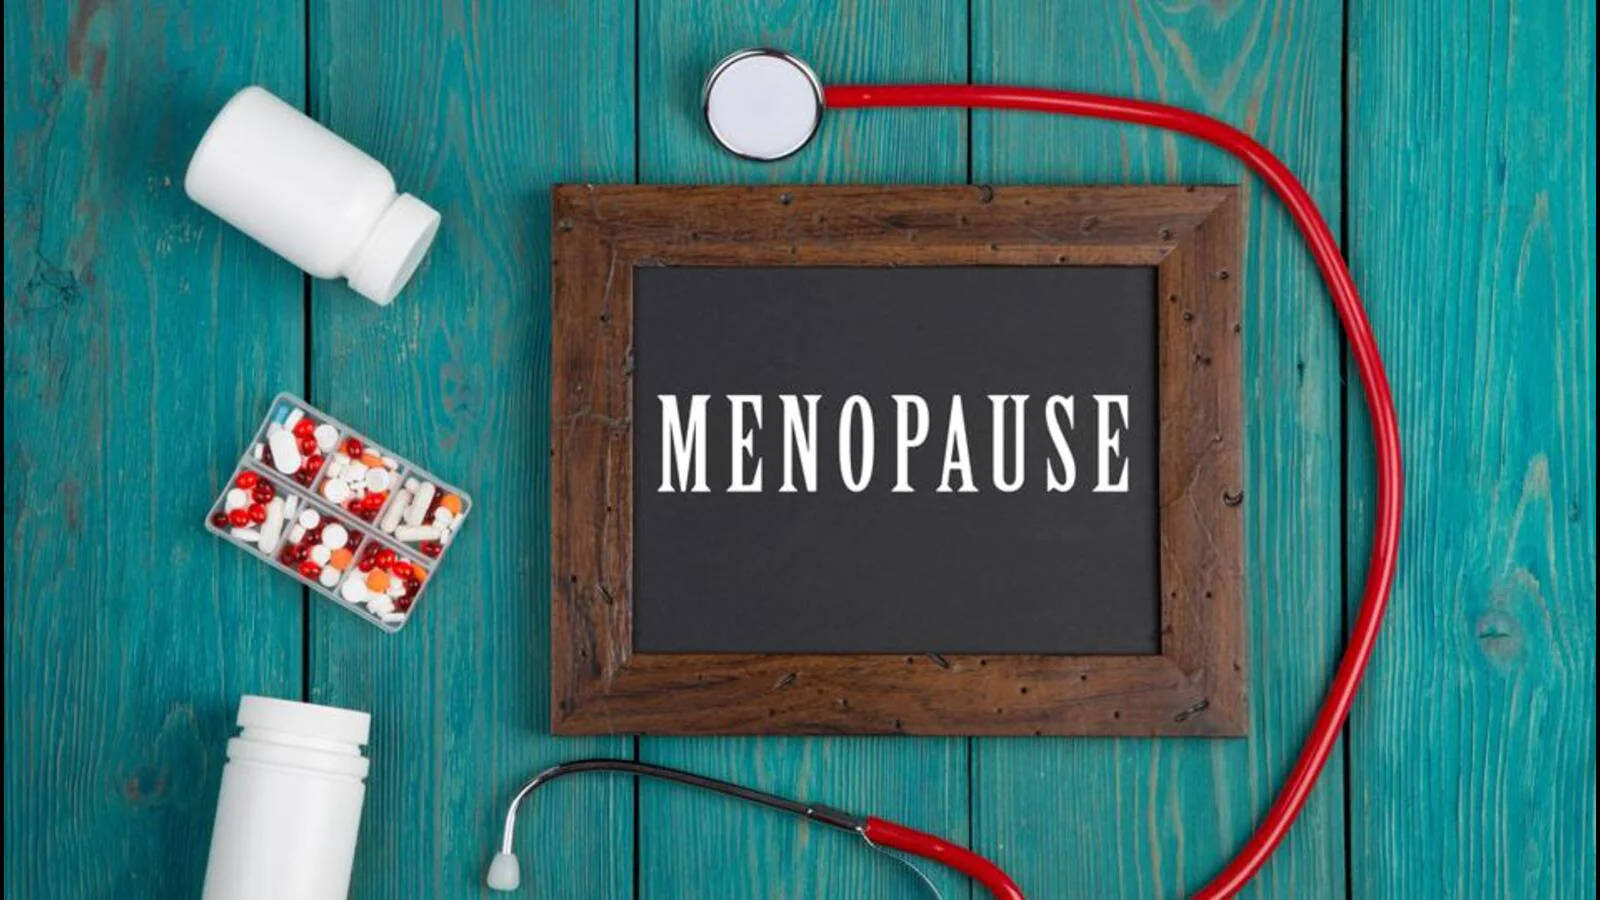 Menopause On Chalkboard Background